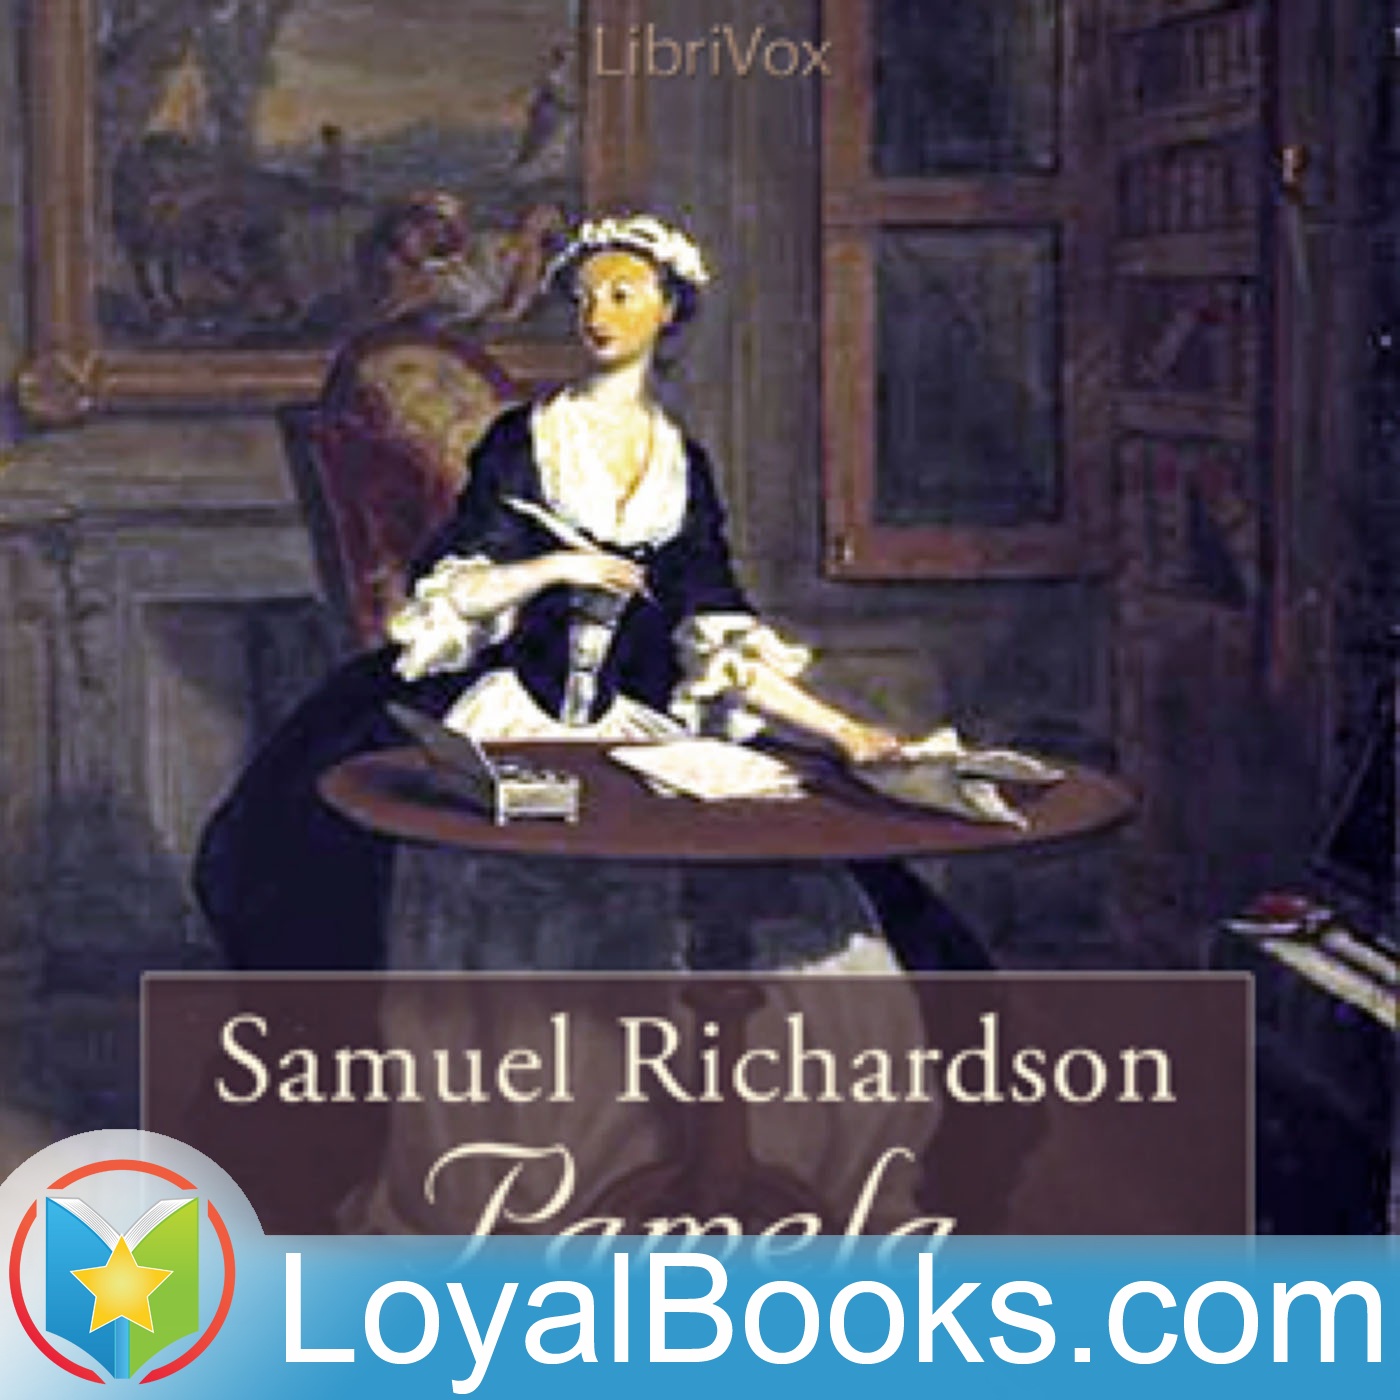 Pamela, or Virtue Rewarded by Samuel Richardson